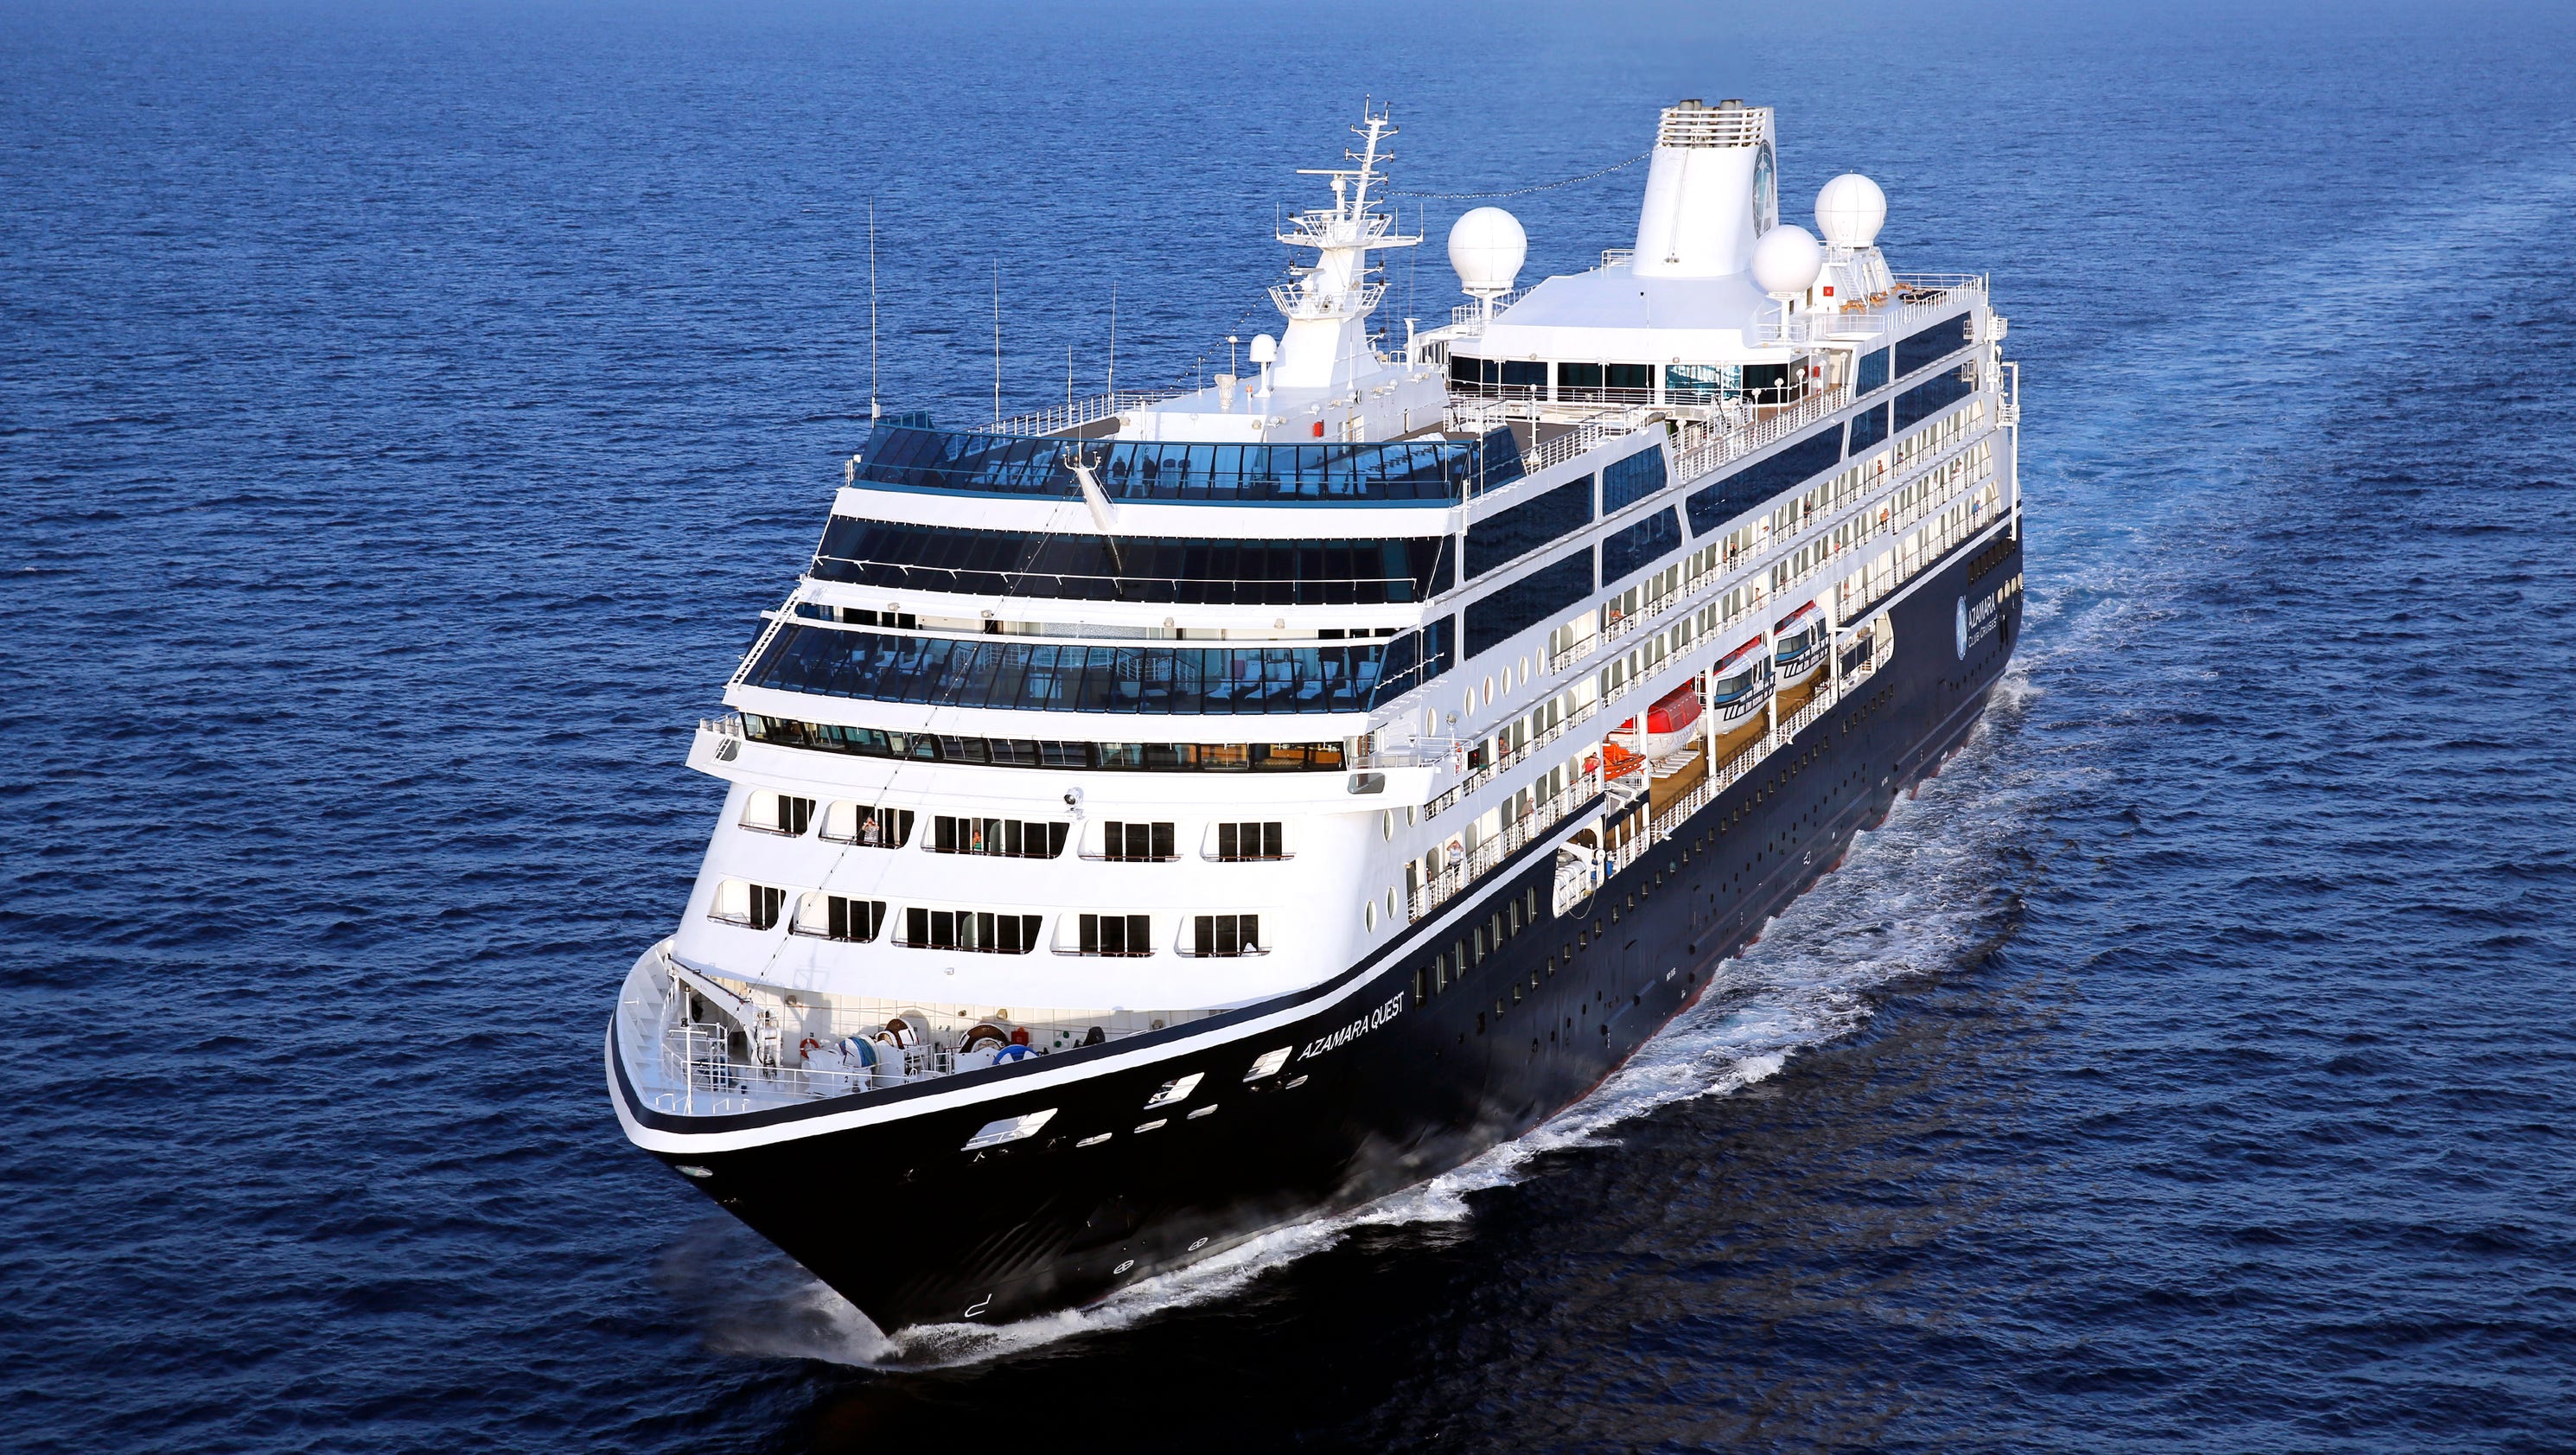 Exclusive Cruise line Azamara plans major makeover of ships